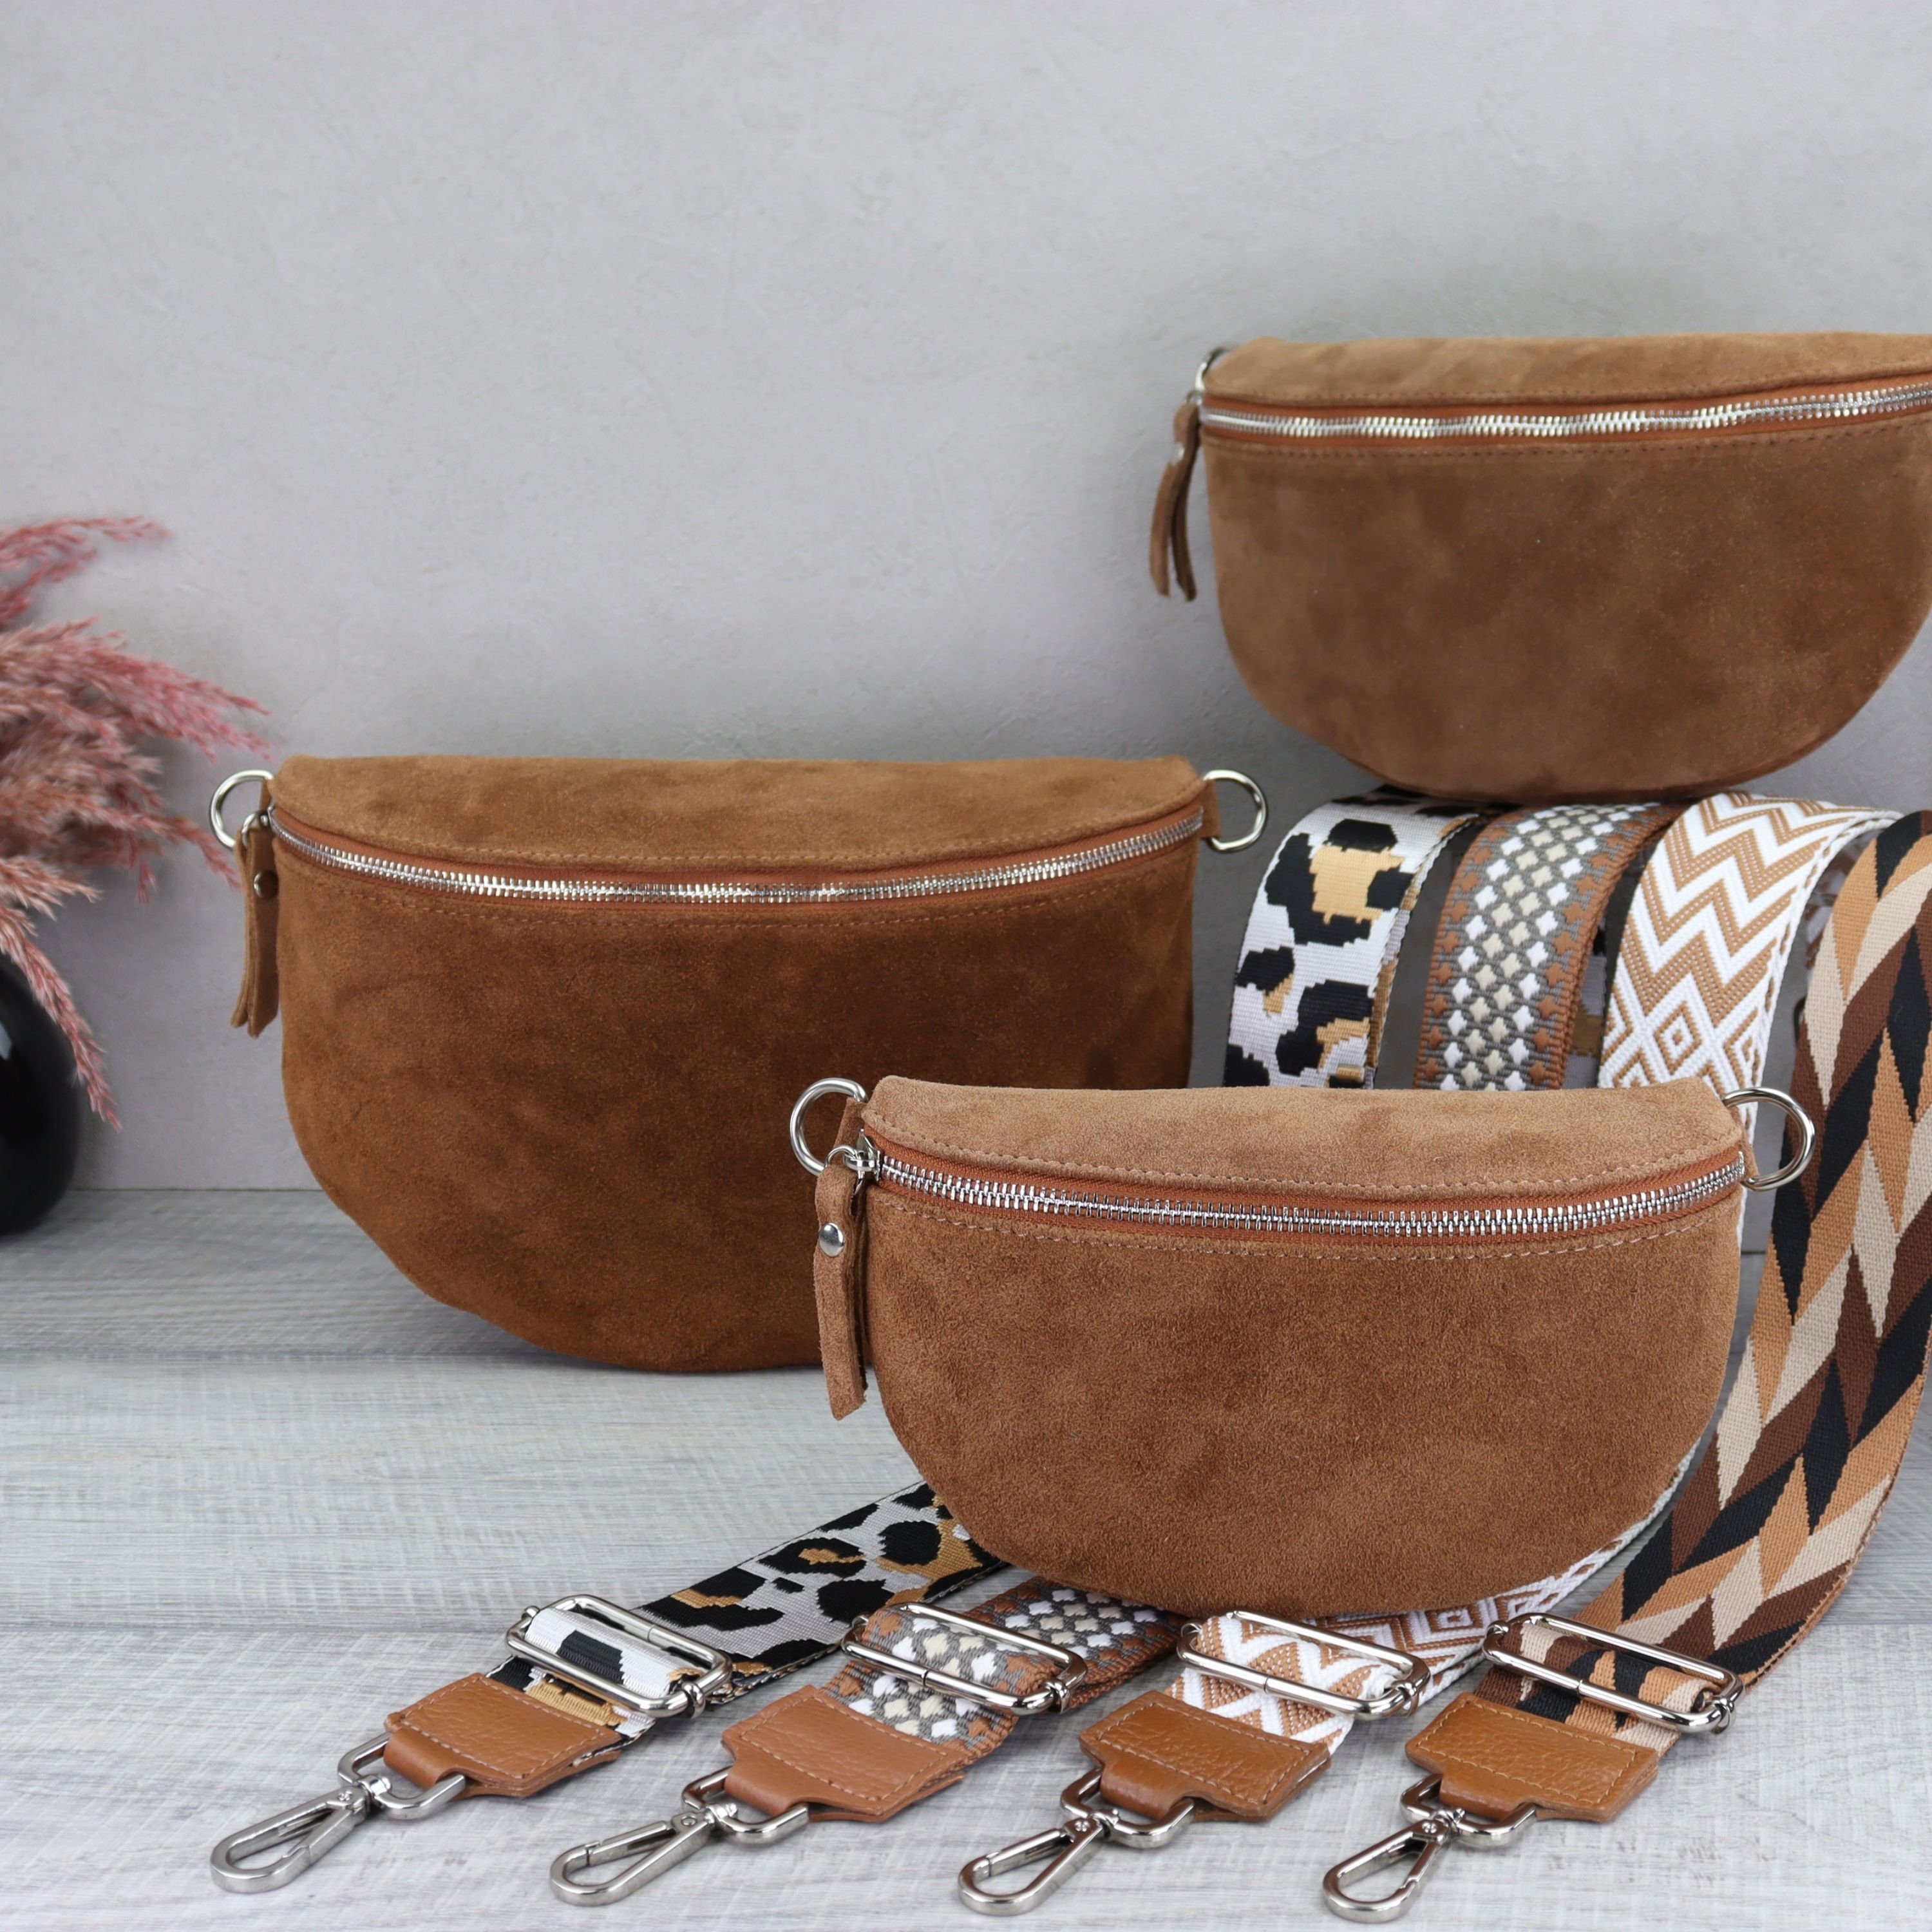 Handmade Sanna Suede Leather Mini Fringe Bag in Brown by ABURY